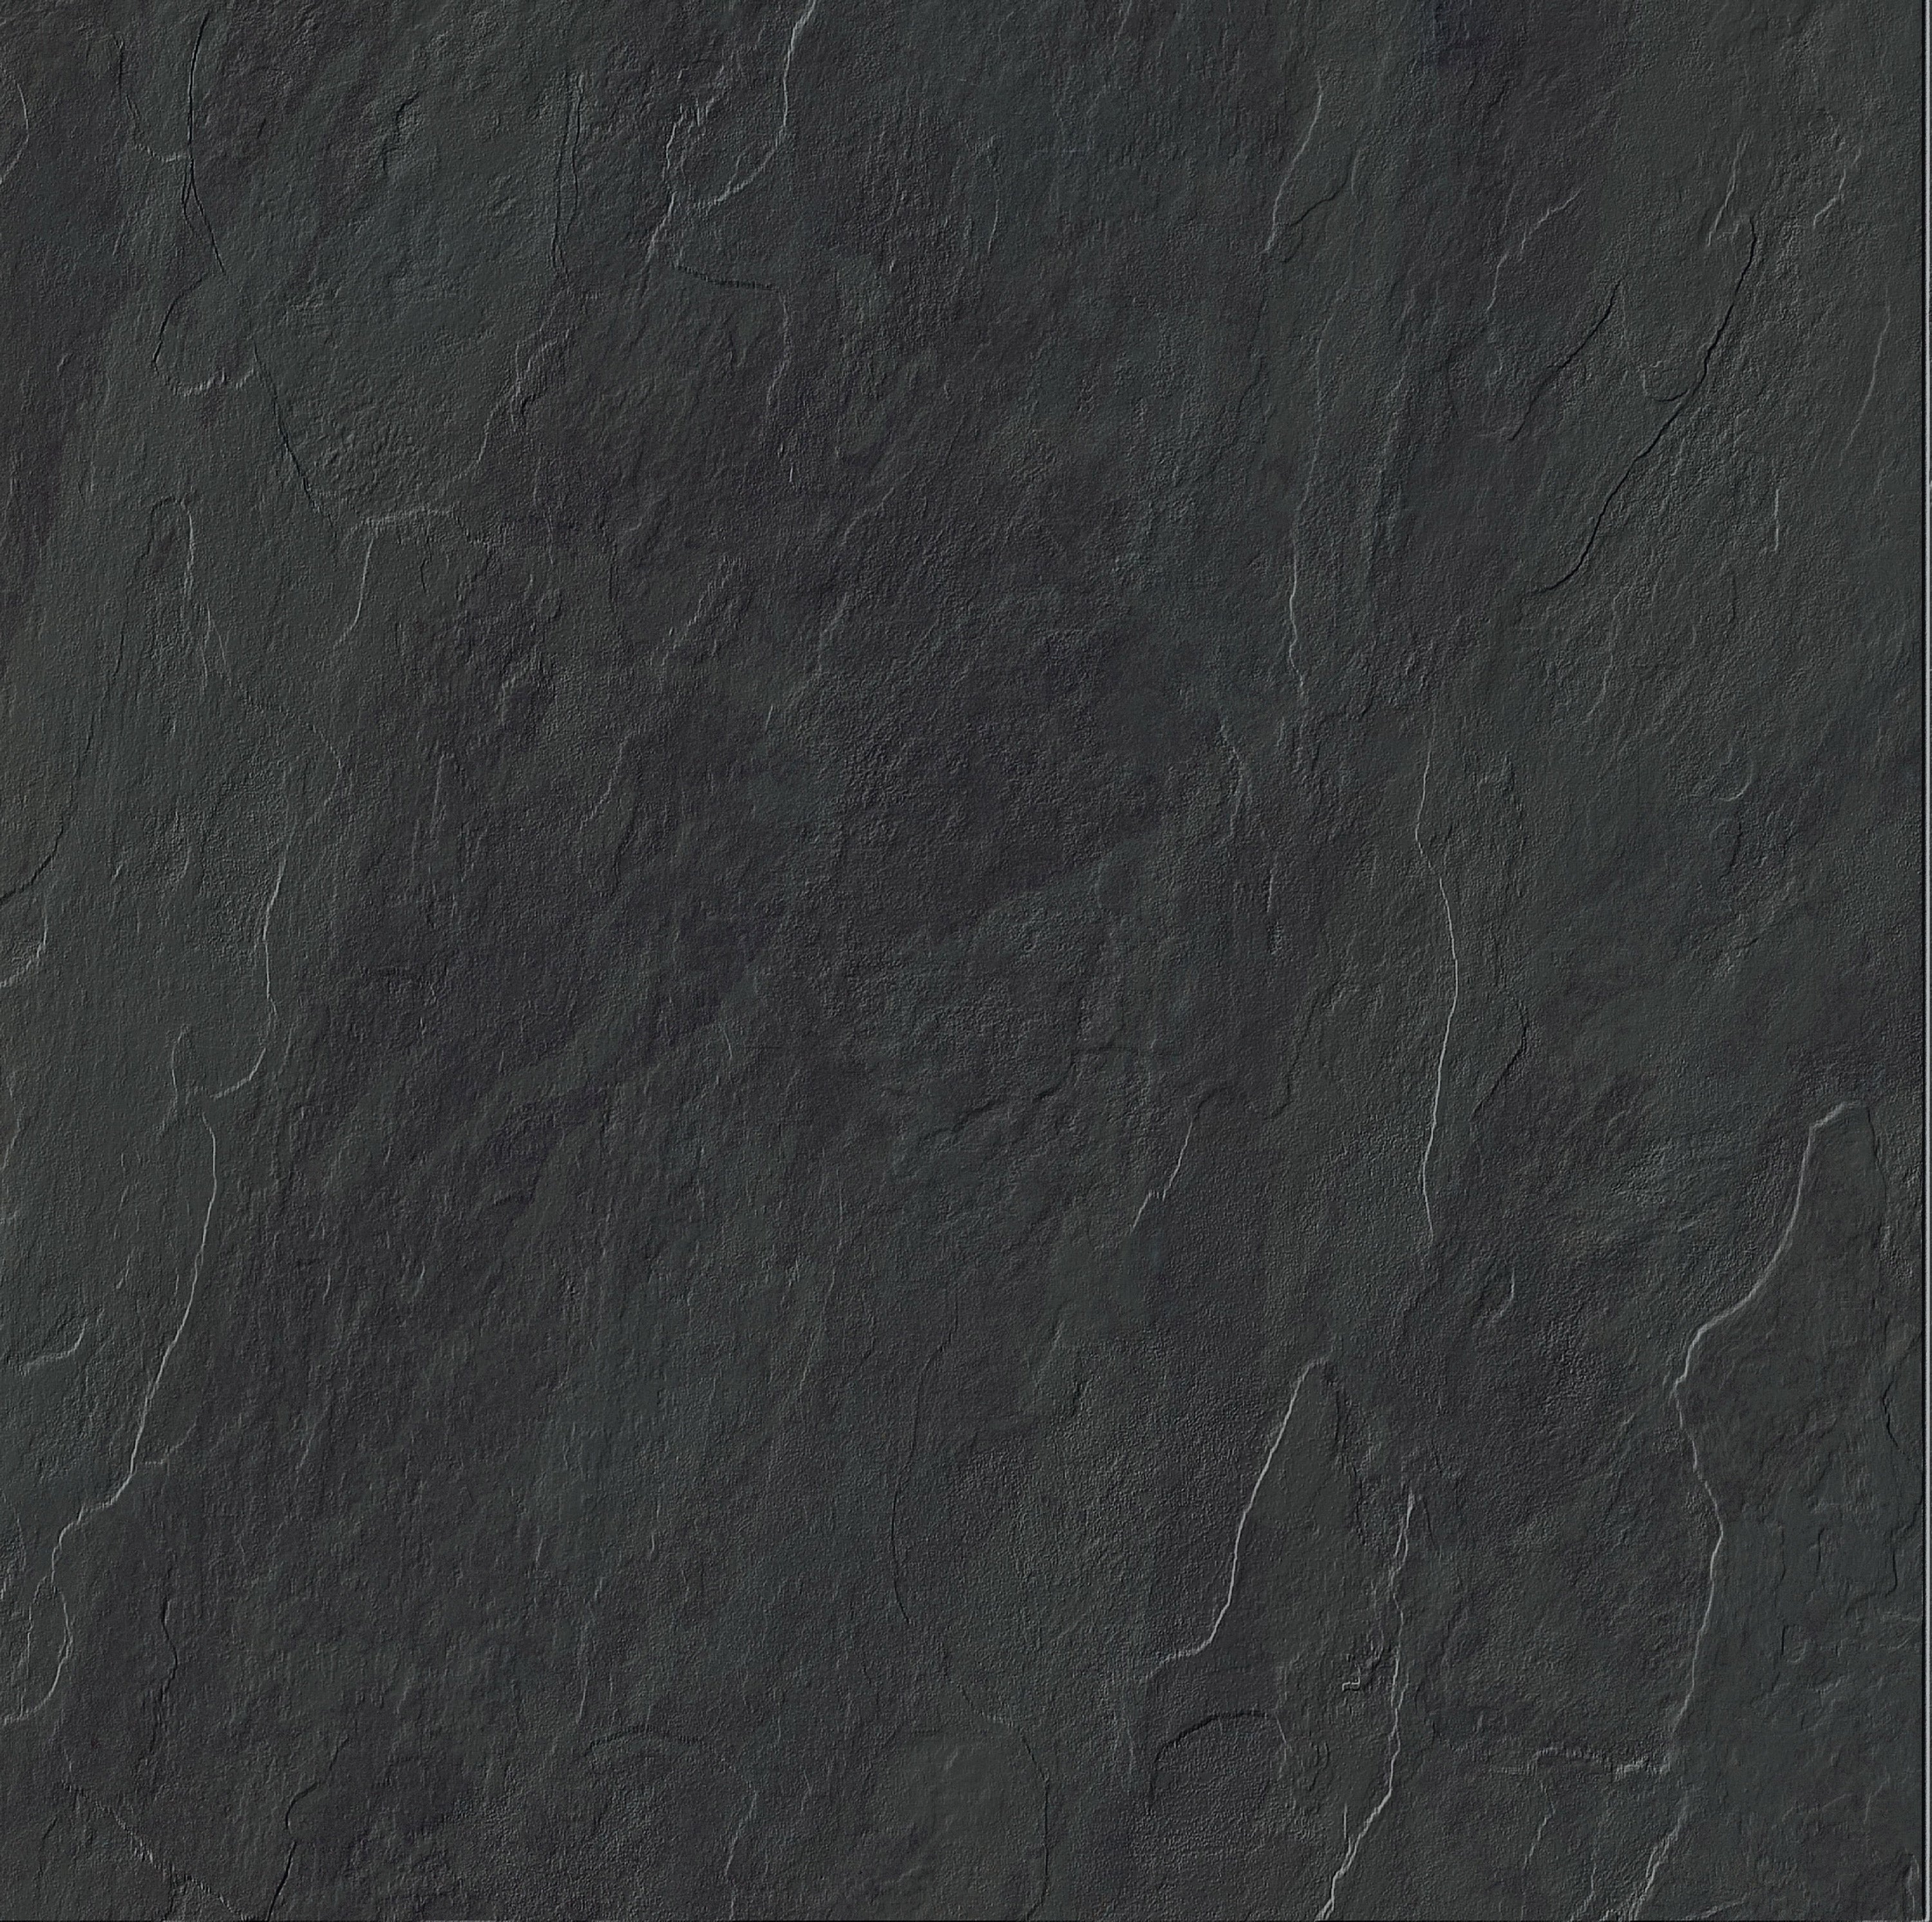 landmark frontier20 slate montauk black paver tile 12x12x20mm matte rectified porcelain tile distributed by surface group international